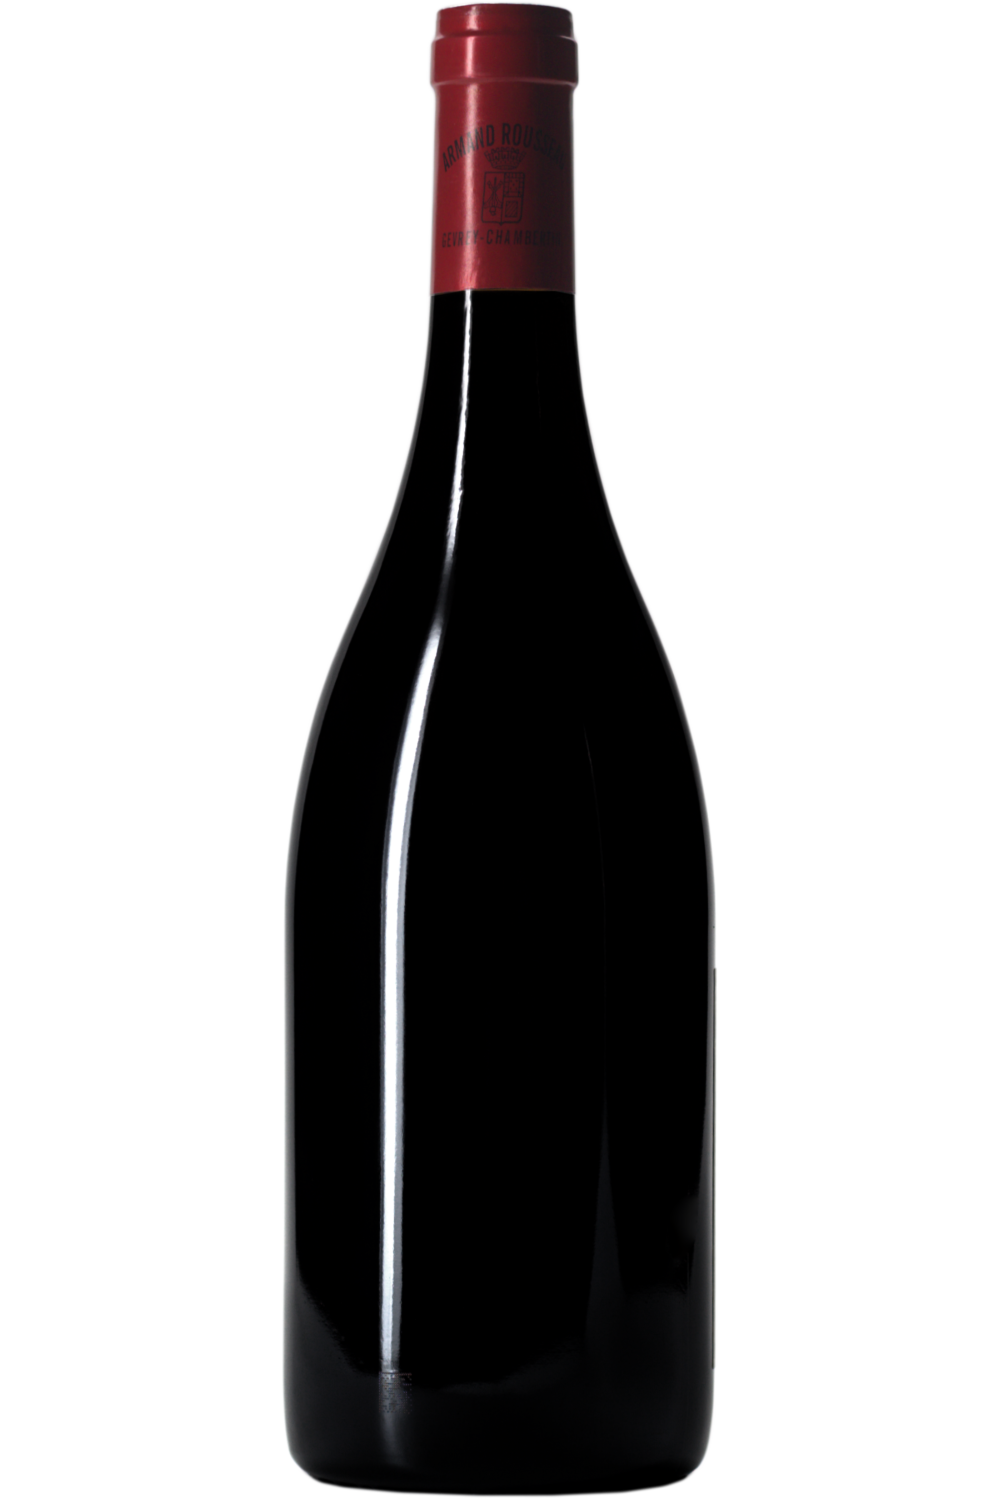 WineVins Domaine Armand Rousseau Charmes-Chamberlin Grand Cru Tinto 2017